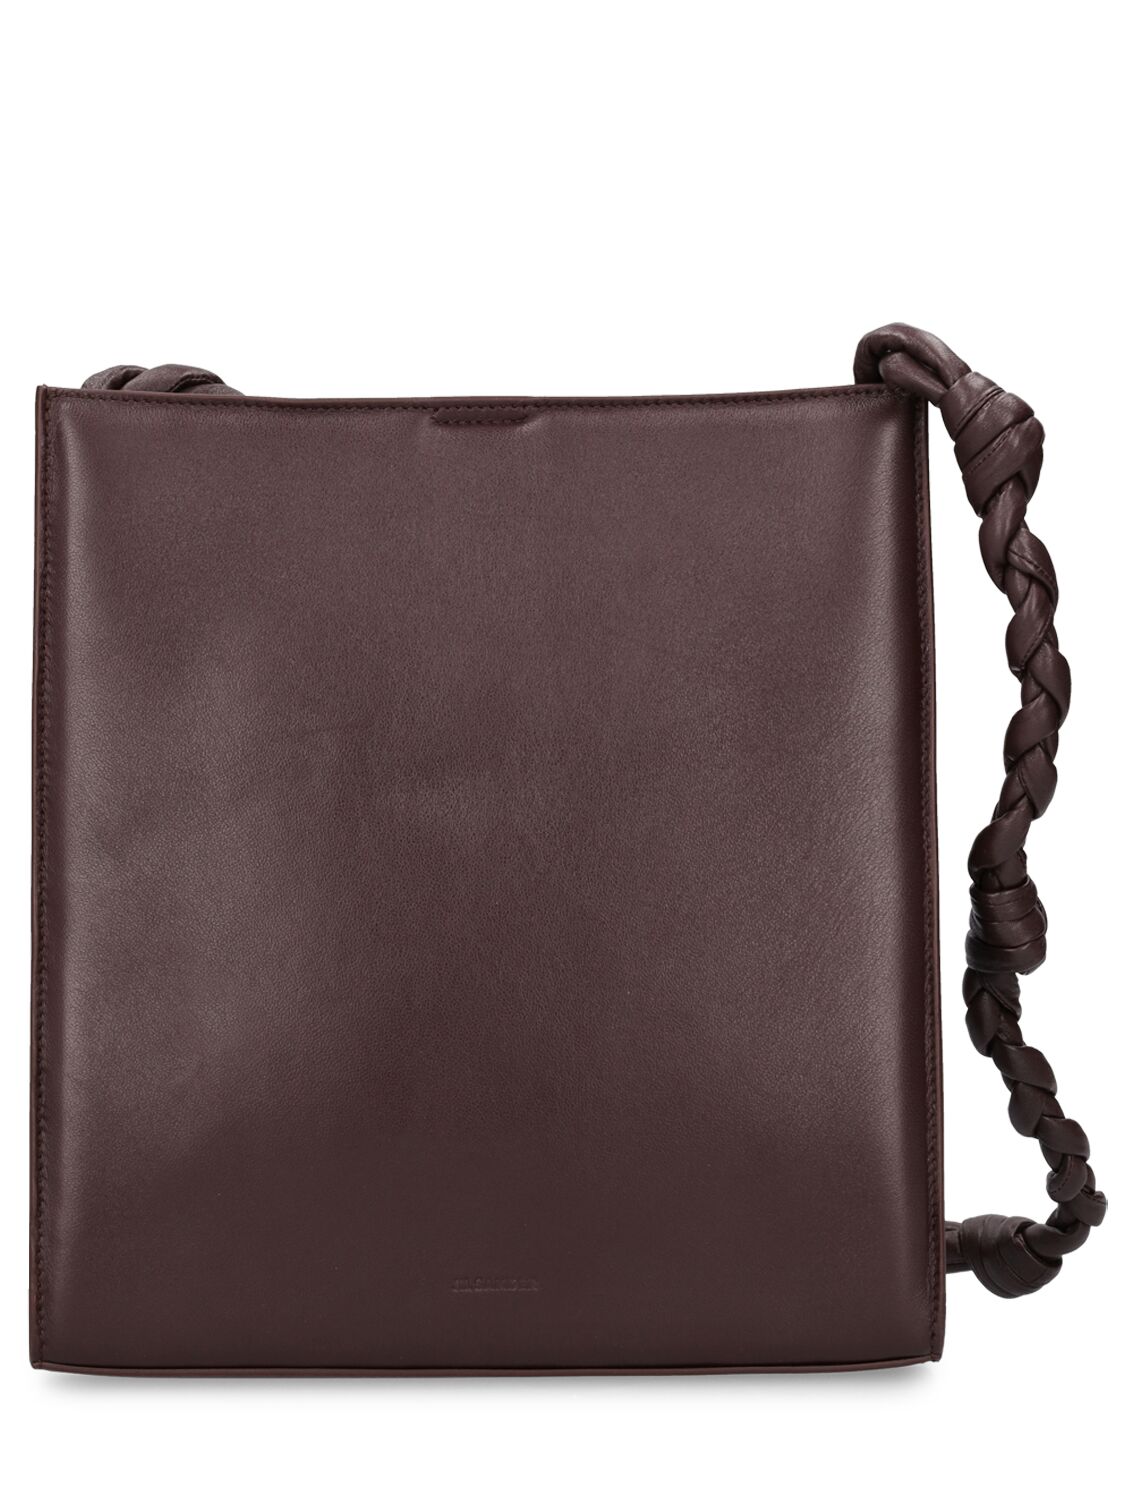 Medium Tangle Padded Shoulder Bag